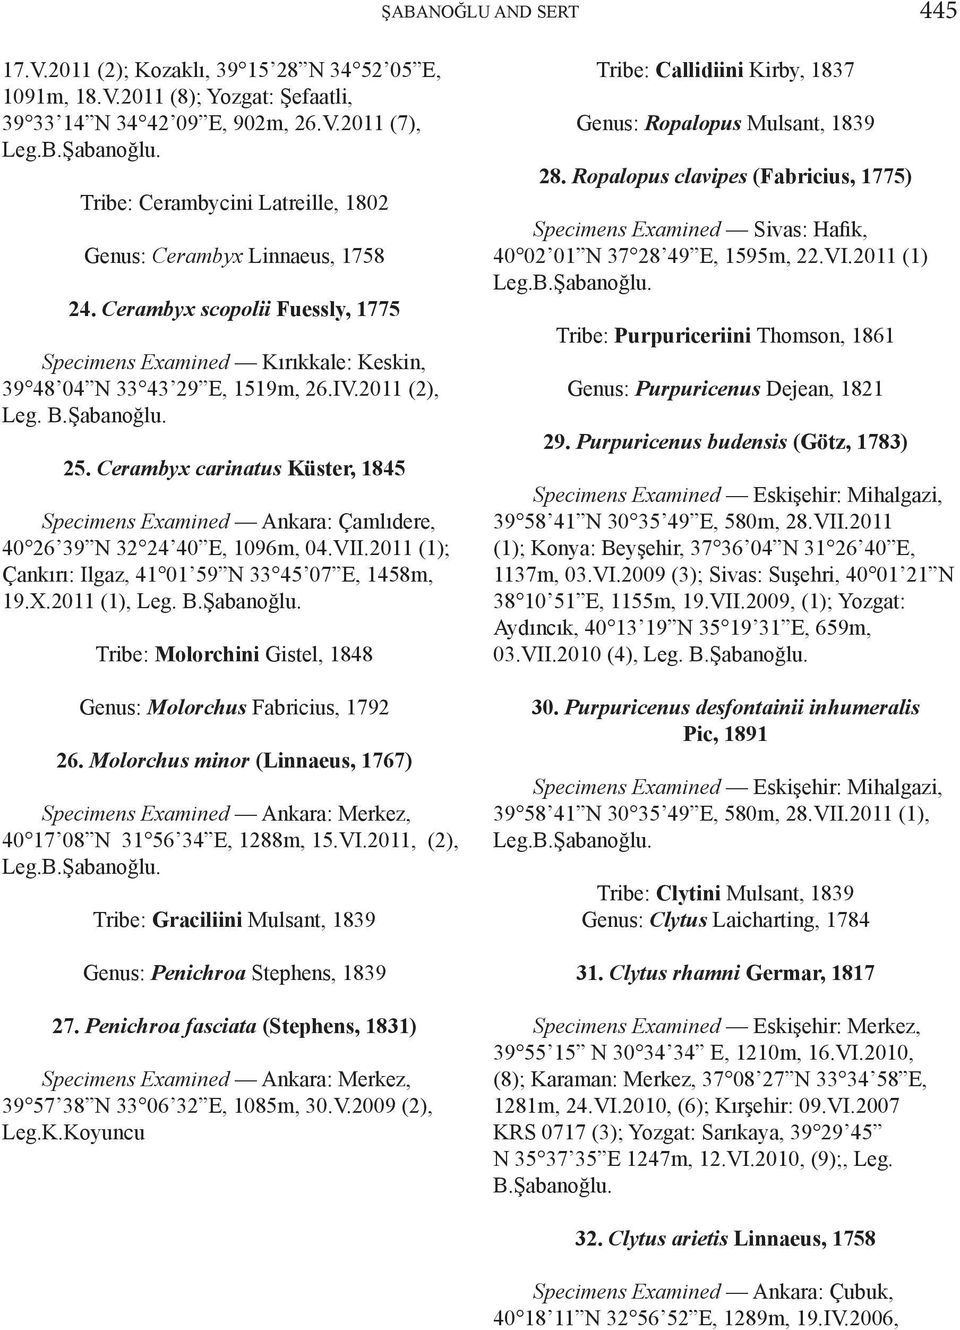 Cerambyx carinatus Küster, 1845 Specimens Examined Ankara: Çamlıdere, 40 26 39 N 32 24 40 E, 1096m, 04.VII.2011 (1); Çankırı: Ilgaz, 41 01 59 N 33 45 07 E, 1458m, 19.X.2011 (1), Leg. B.Şabanoğlu.